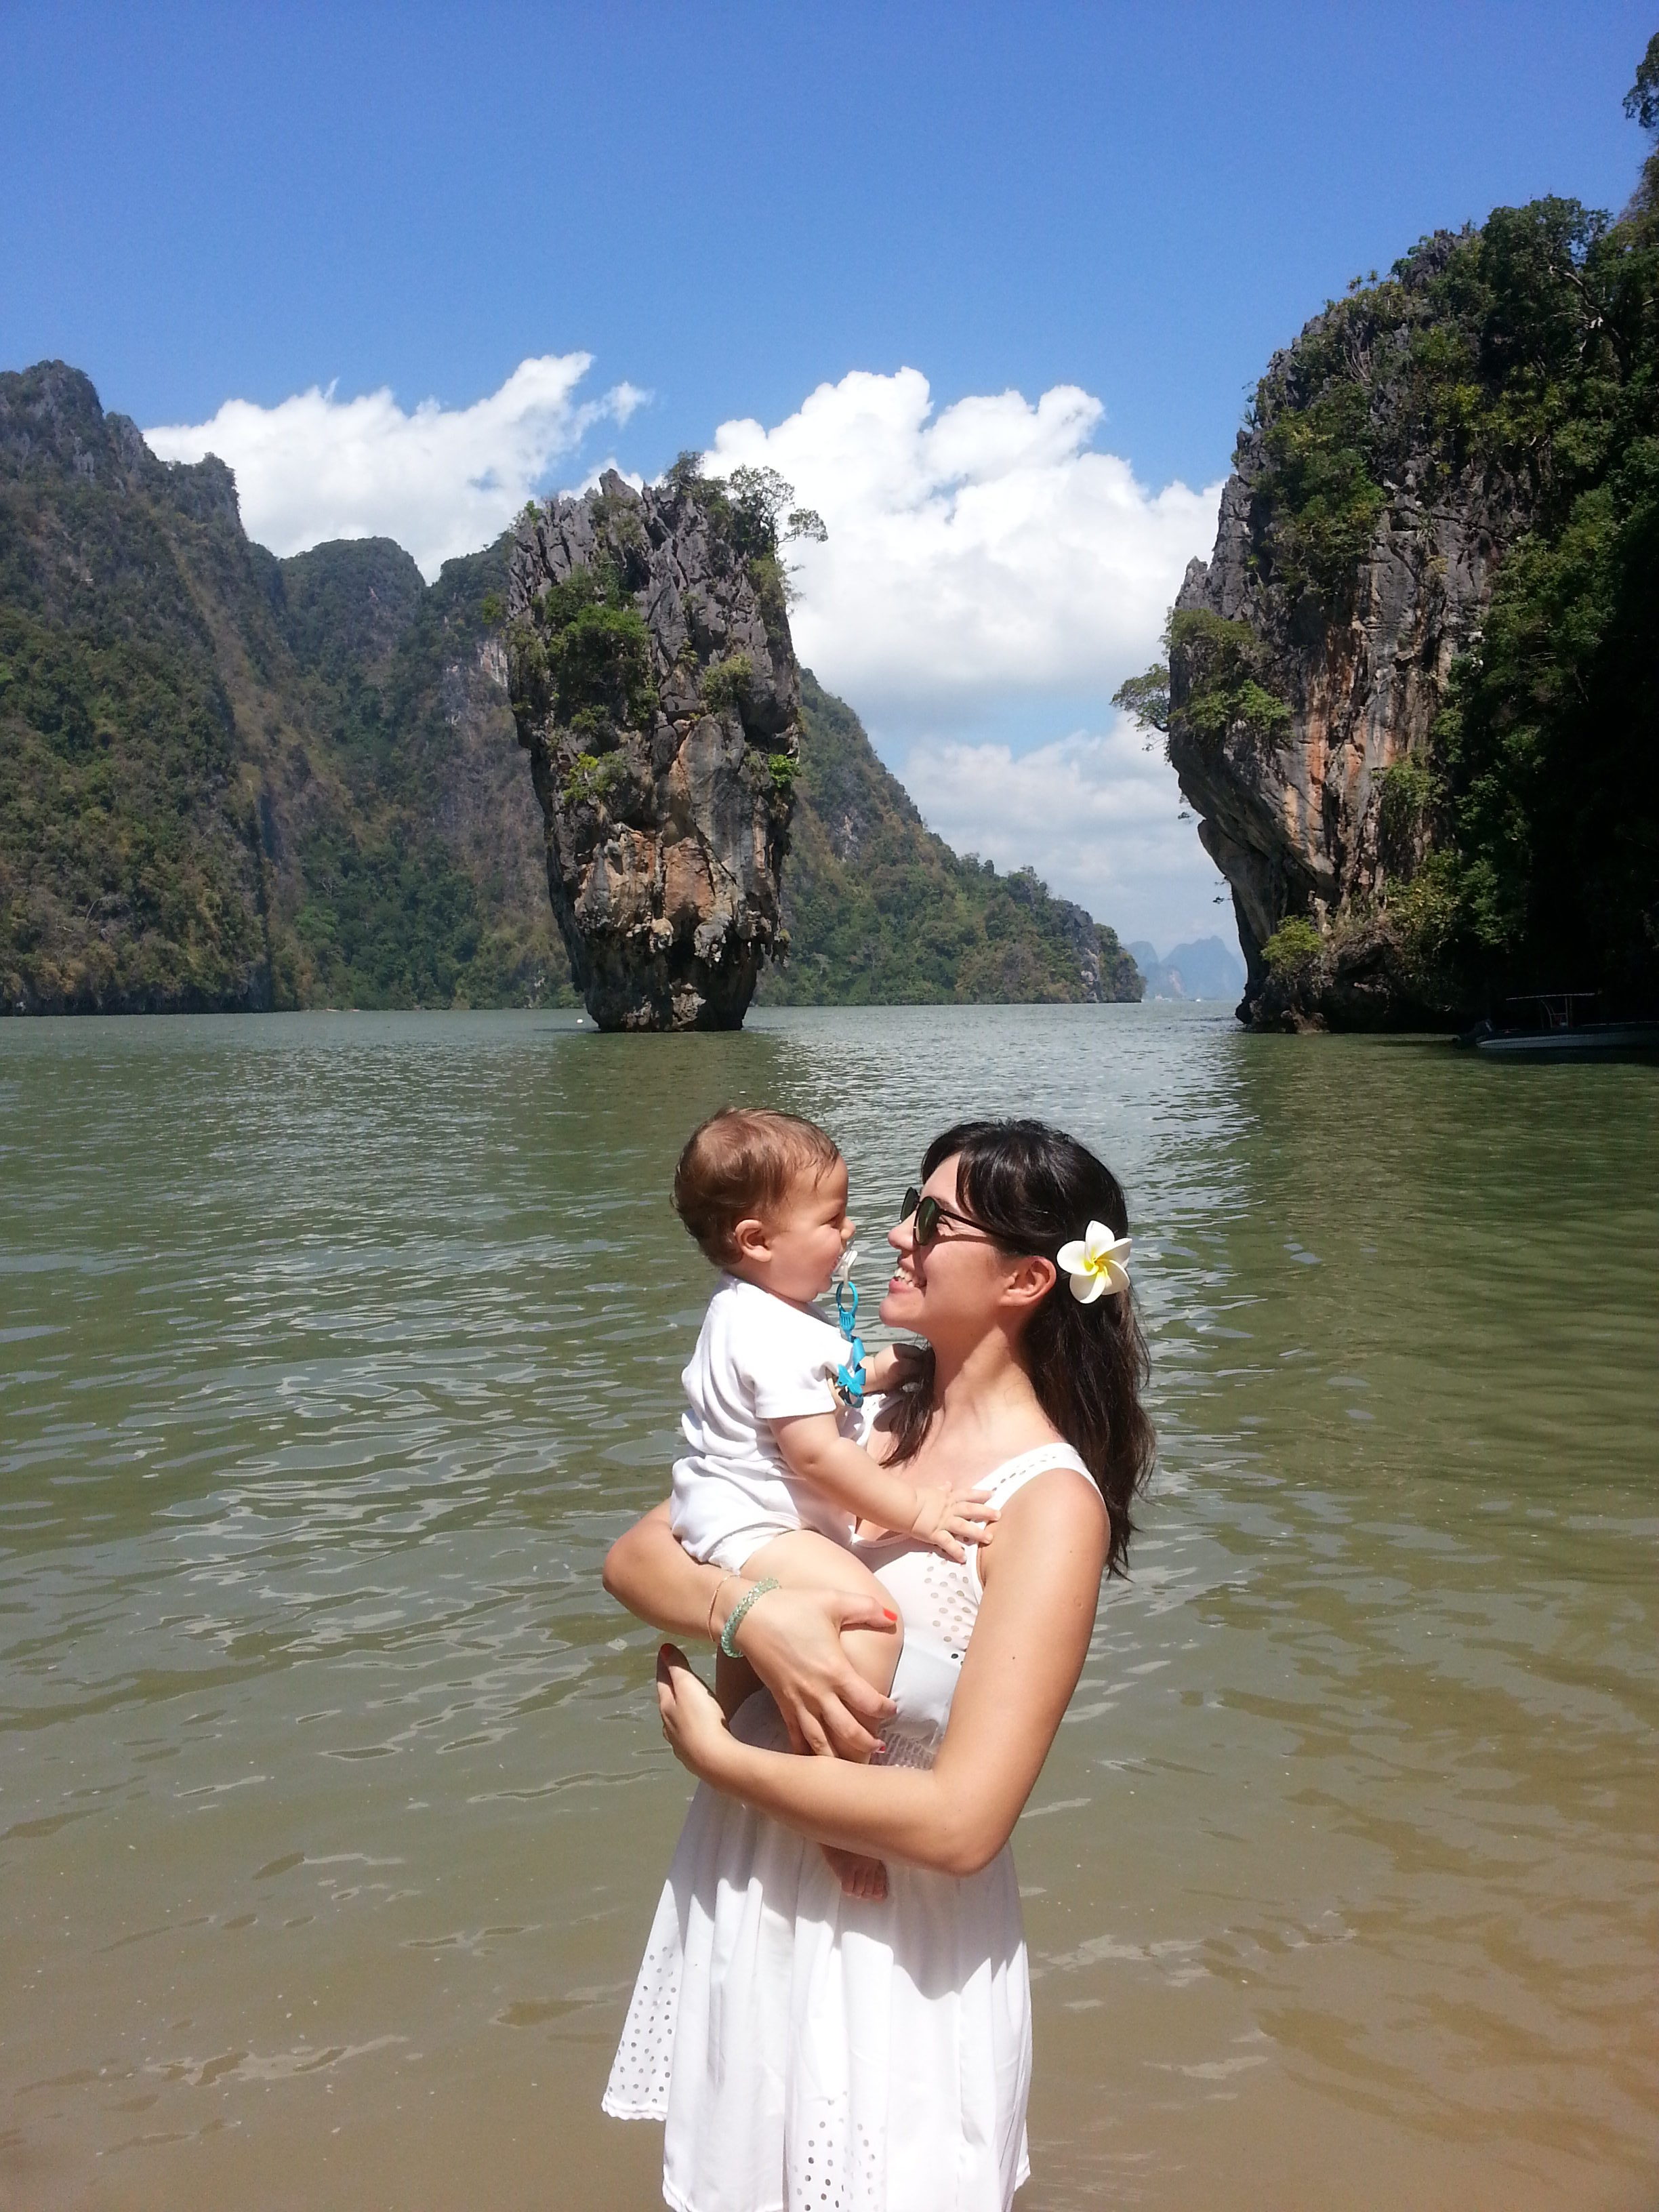 Bebekle Seyahat ve Tayland gezisi